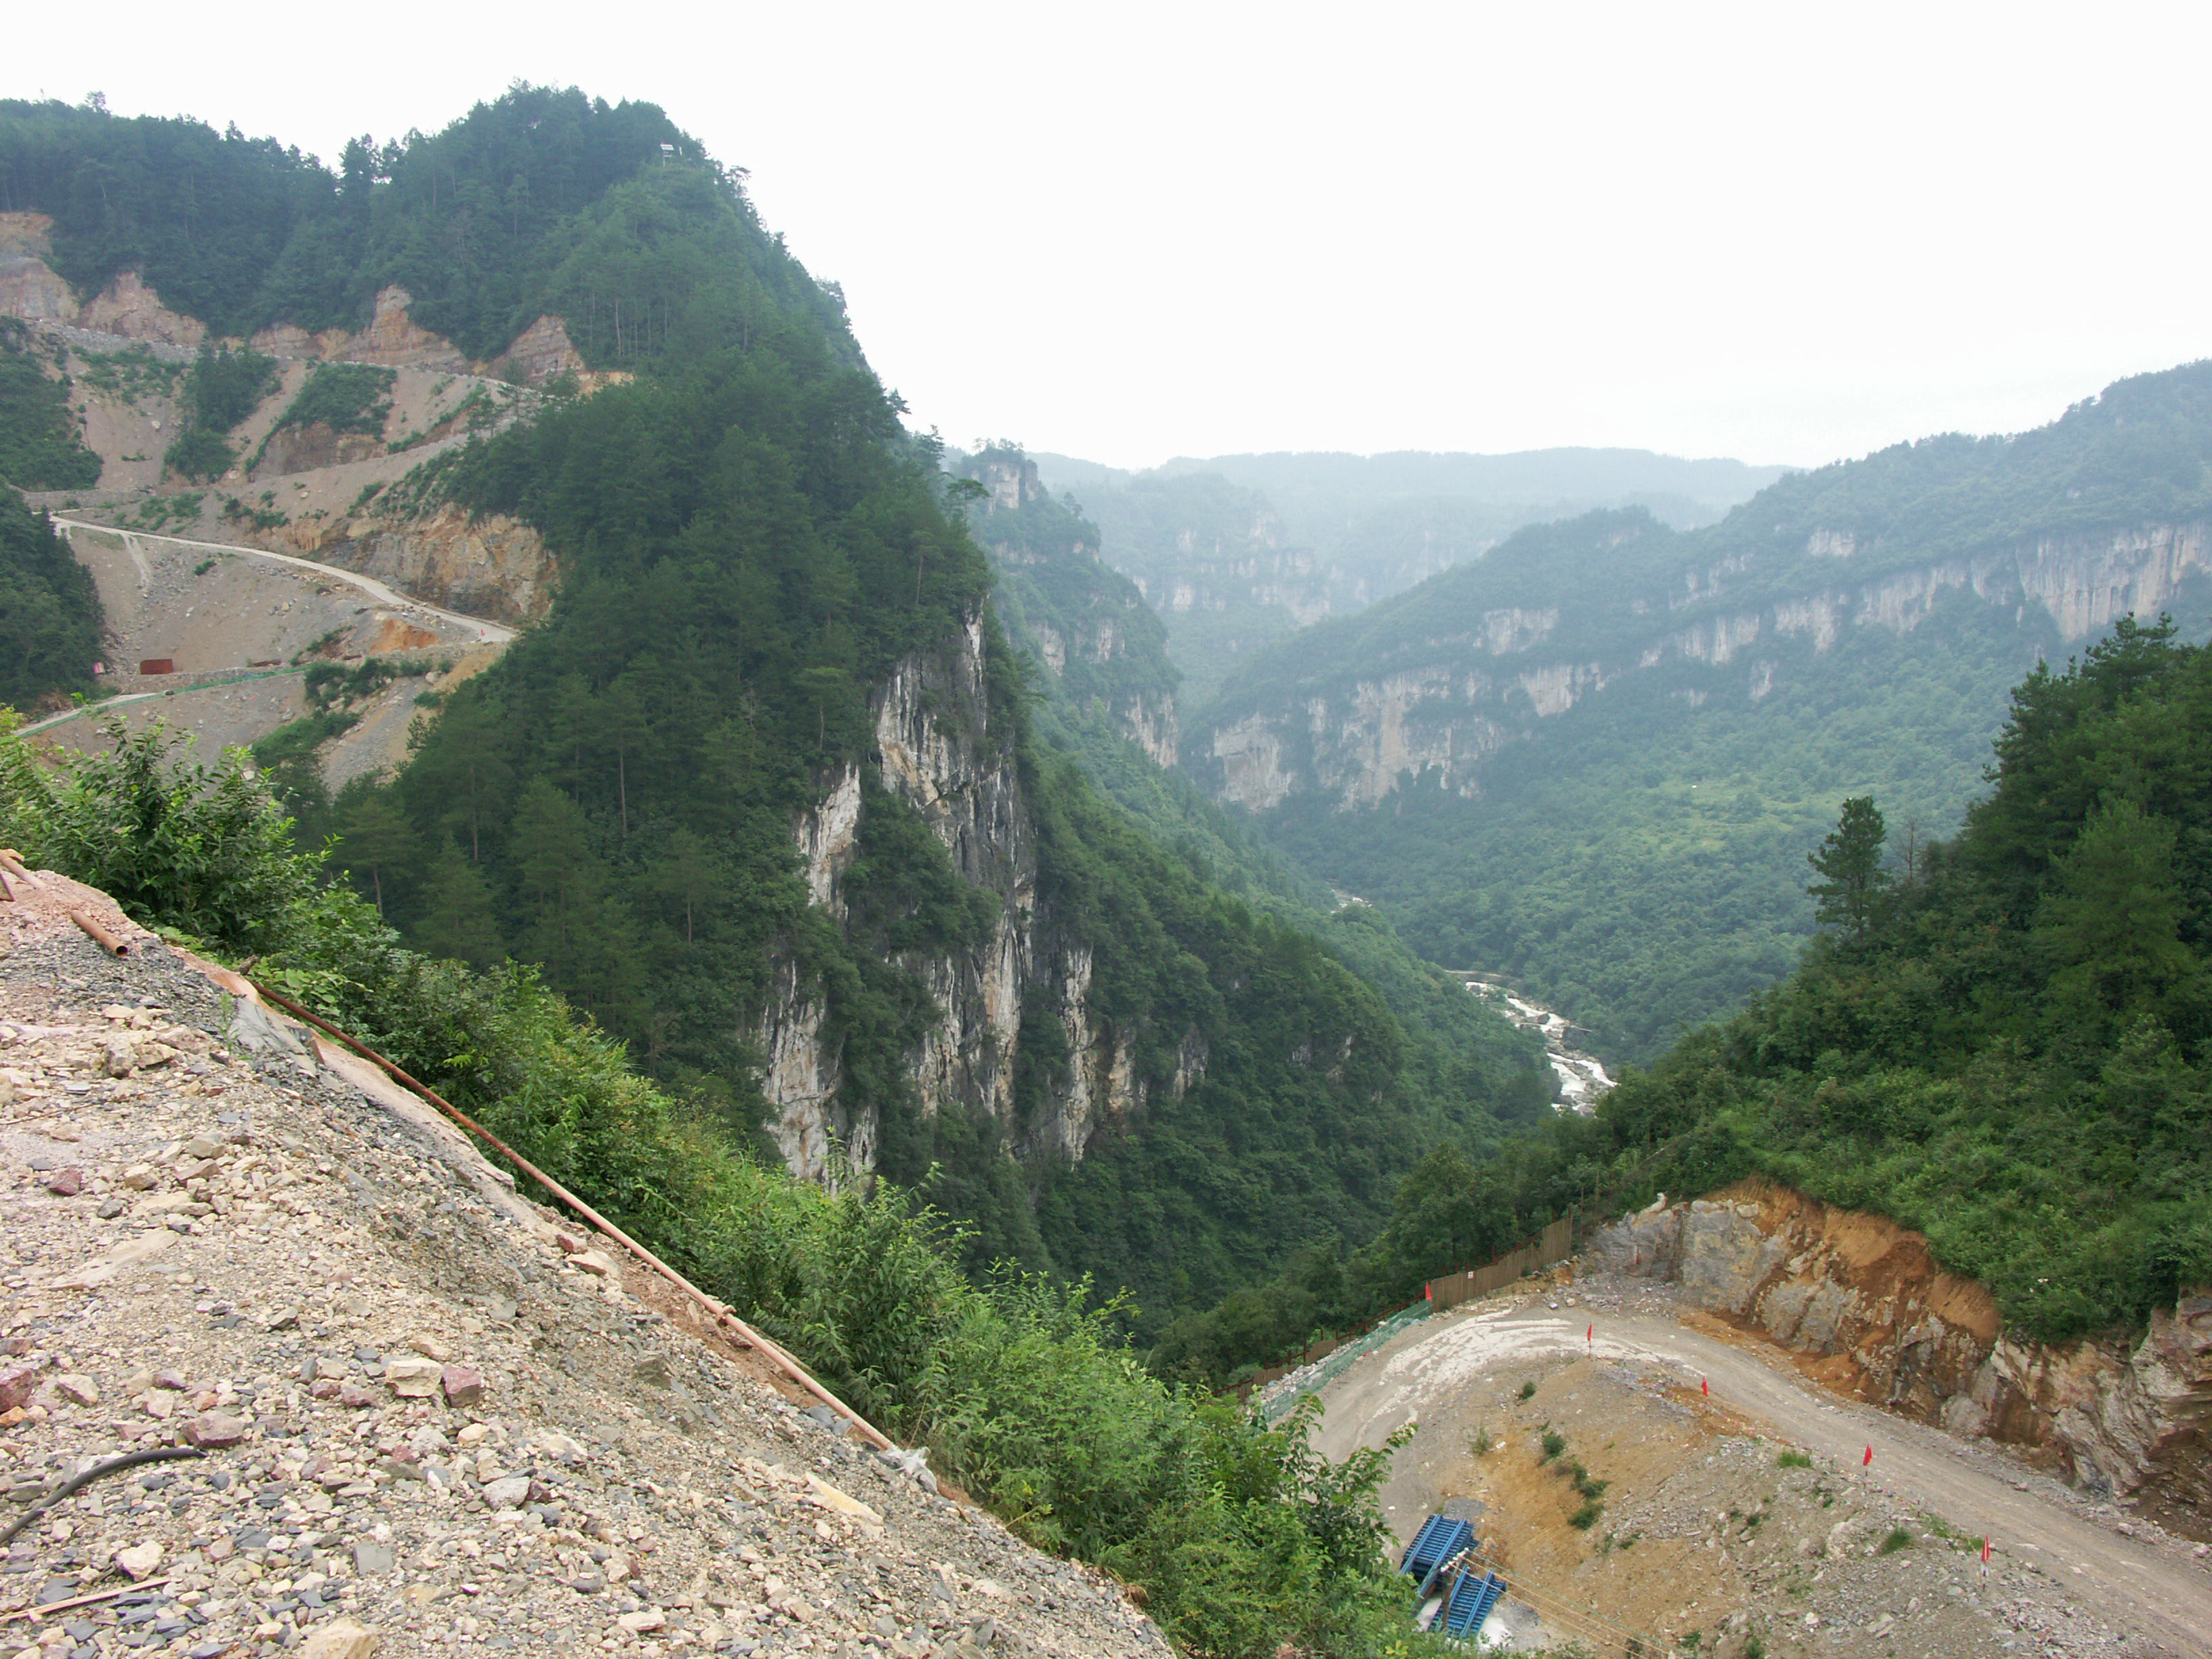 NanjiangRailway2.jpg